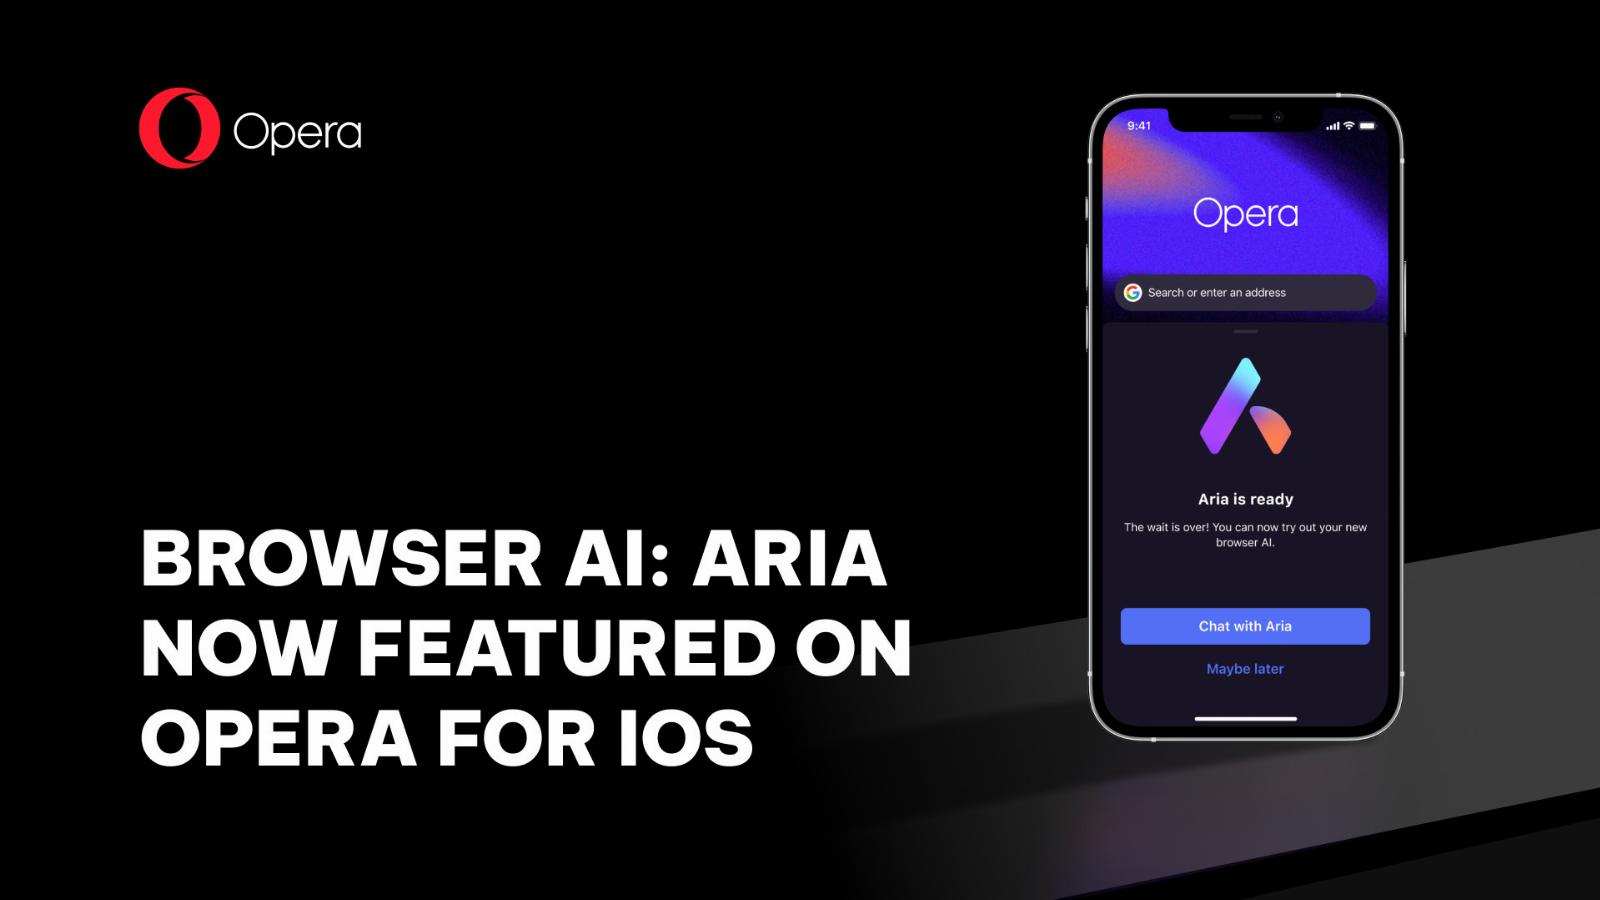 Opera’s iOS web browser gains an AI companion with Aria